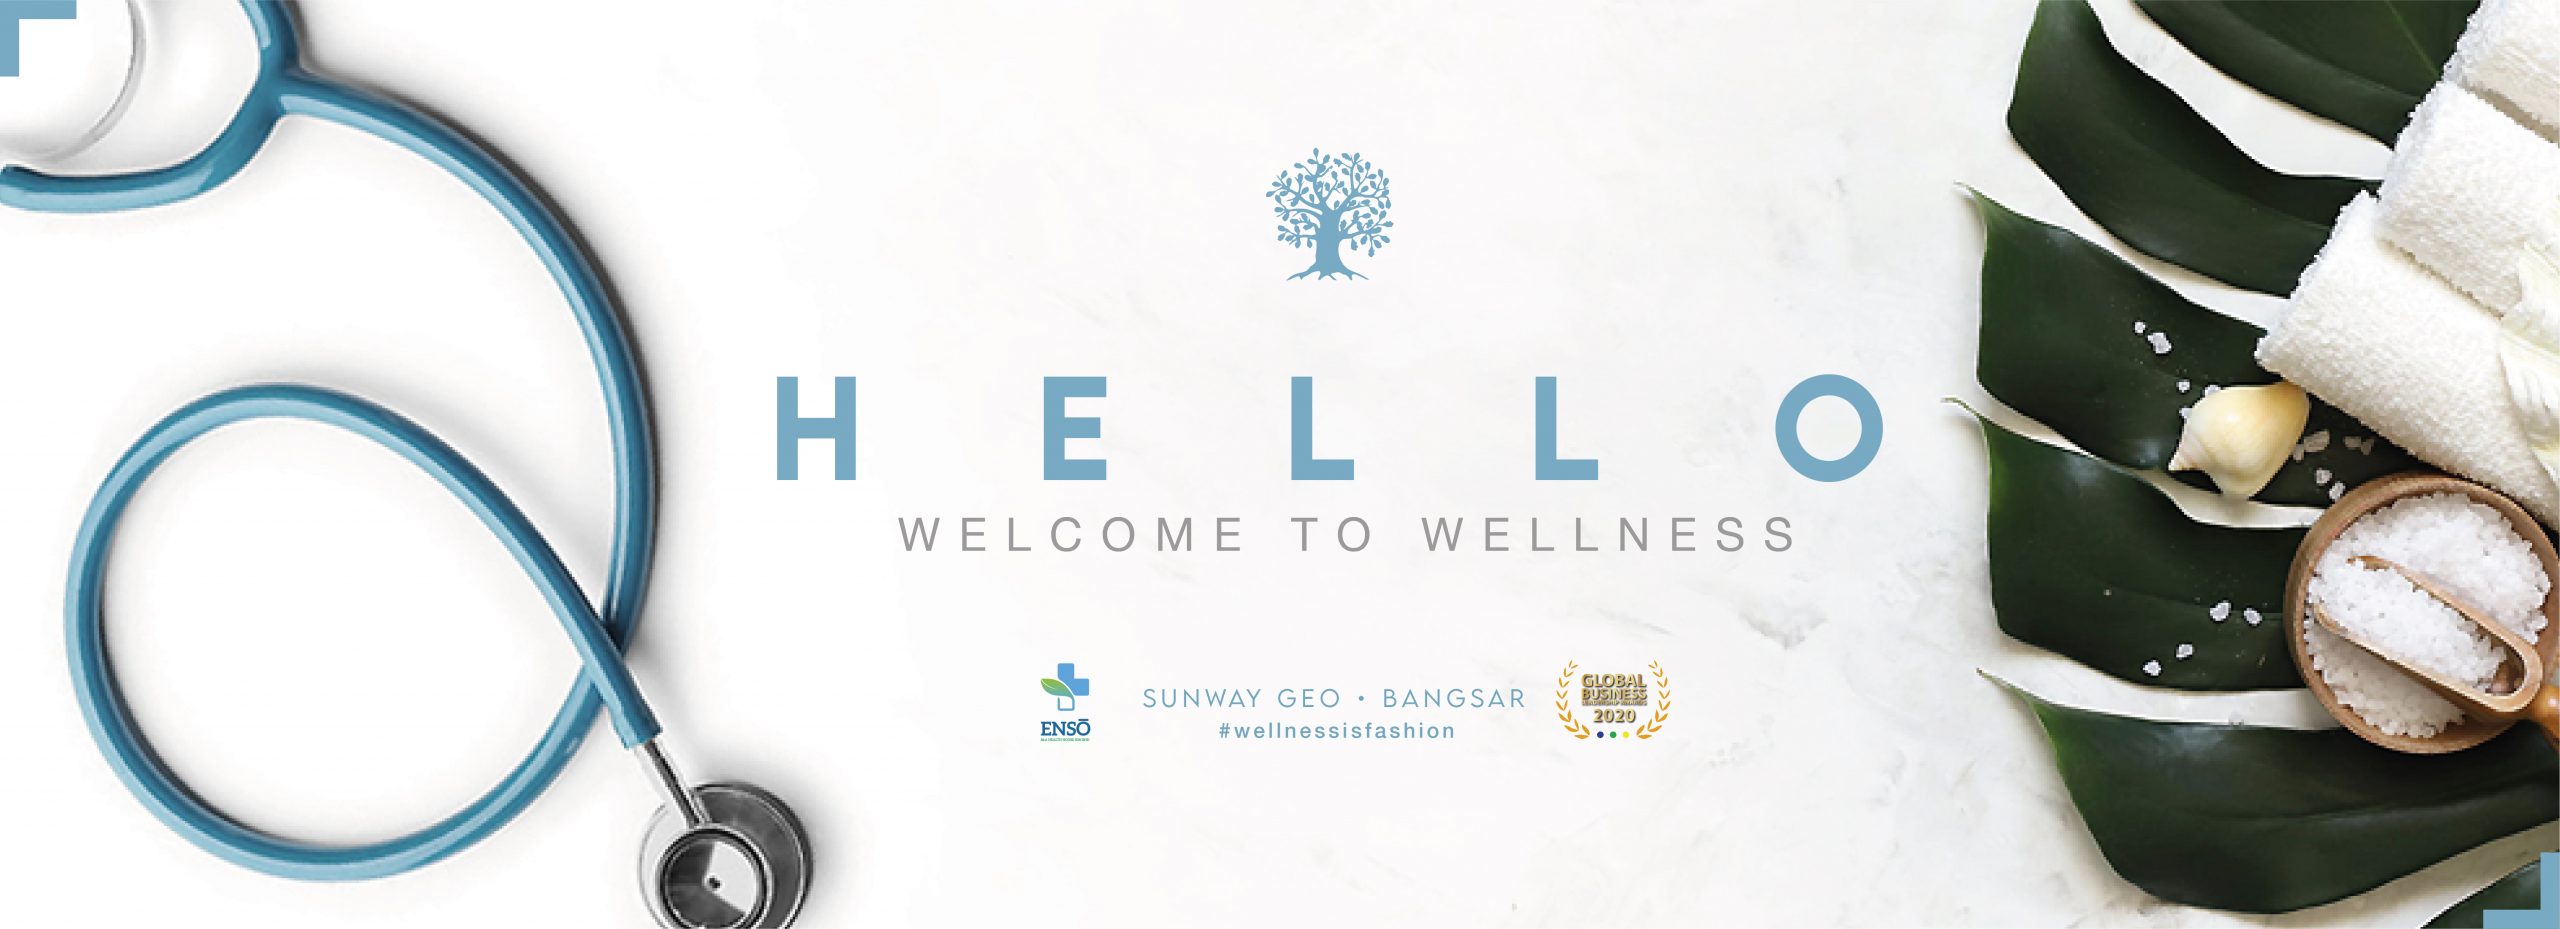 Welcome to wellness